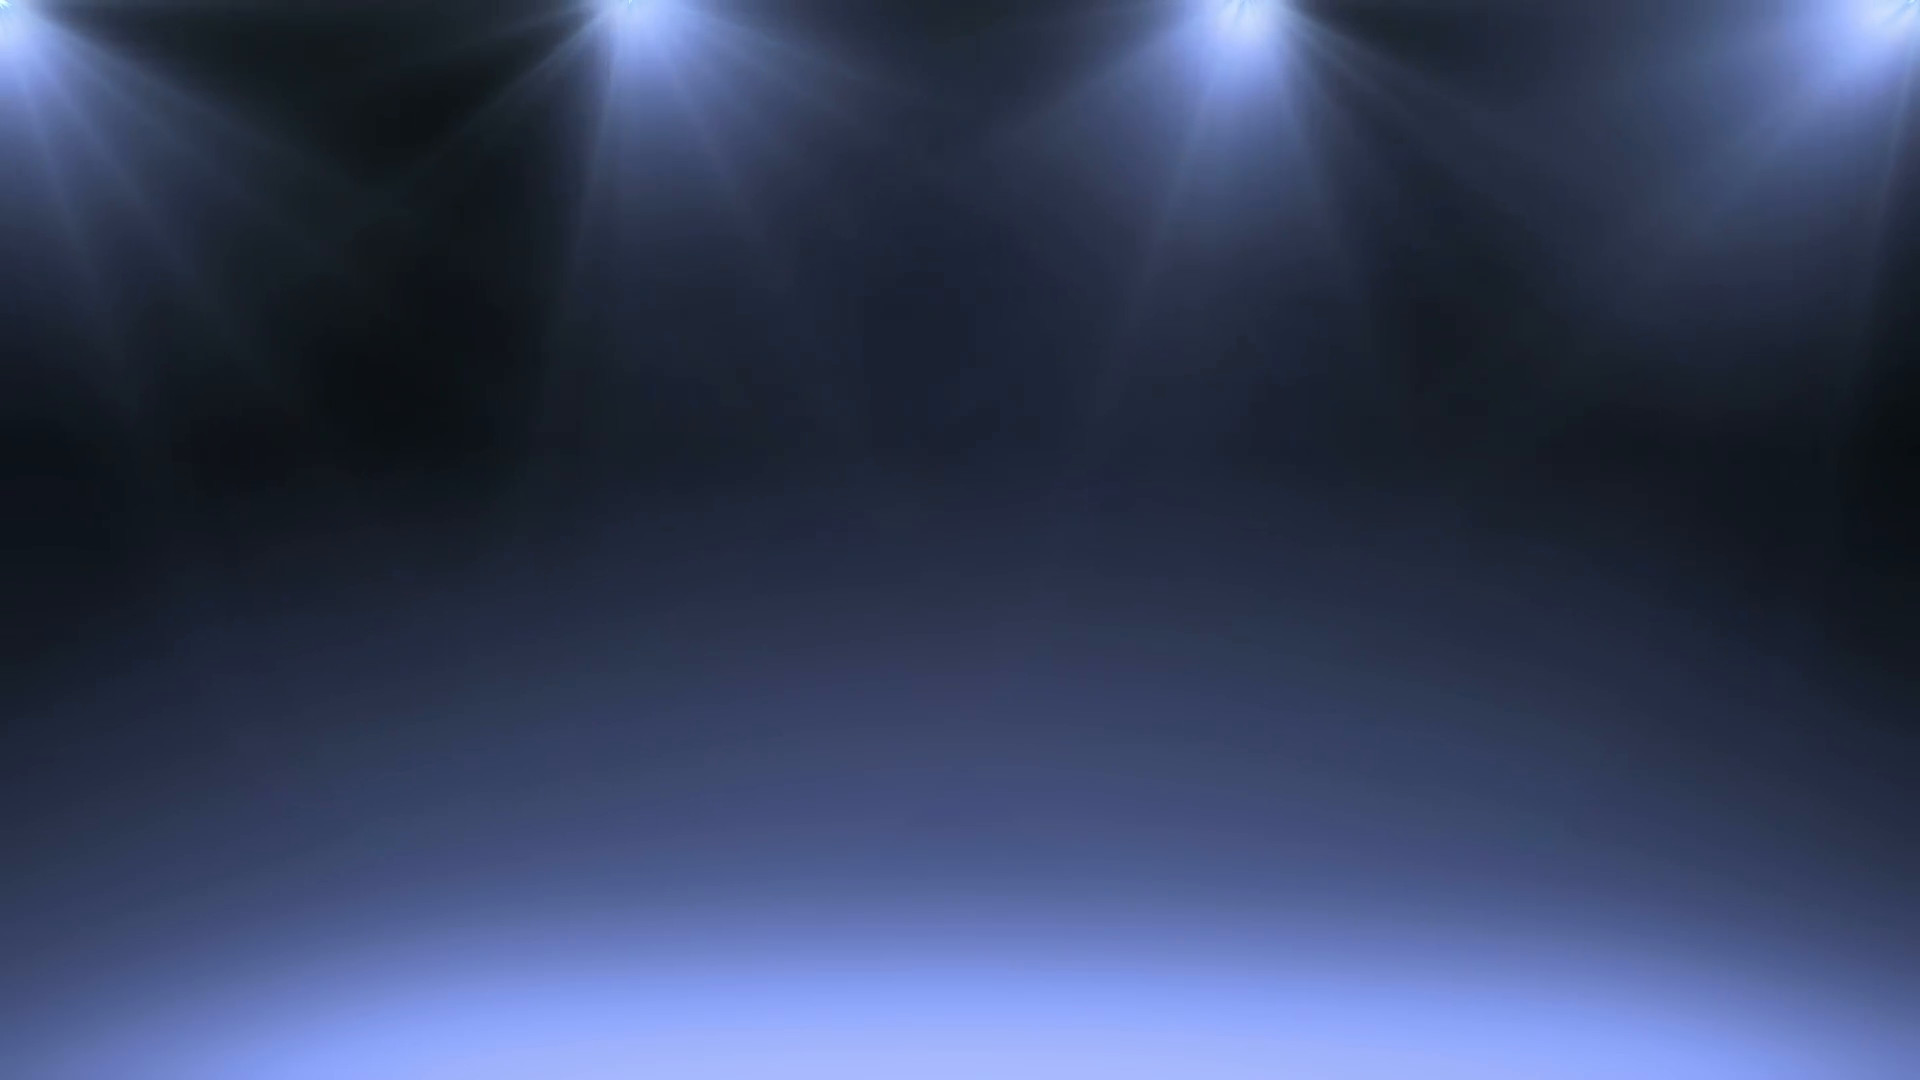 1920x1080 Animated Dark Blue Stage with Spotlights Background. Motion Background -  Storyblocks Video